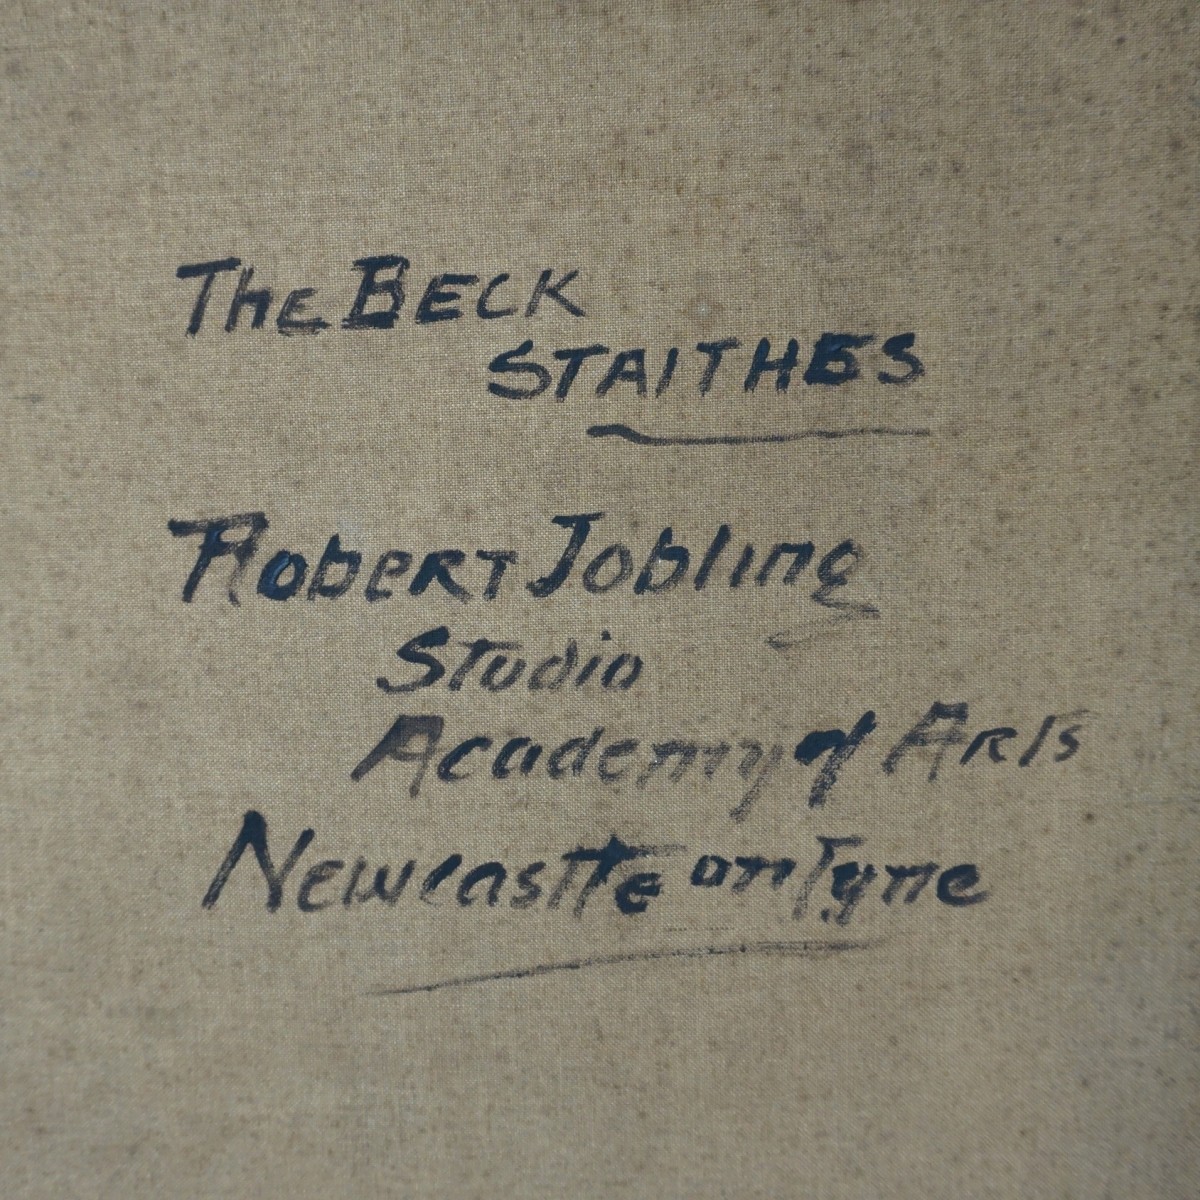 Robert Jobling (1841 - 1923)